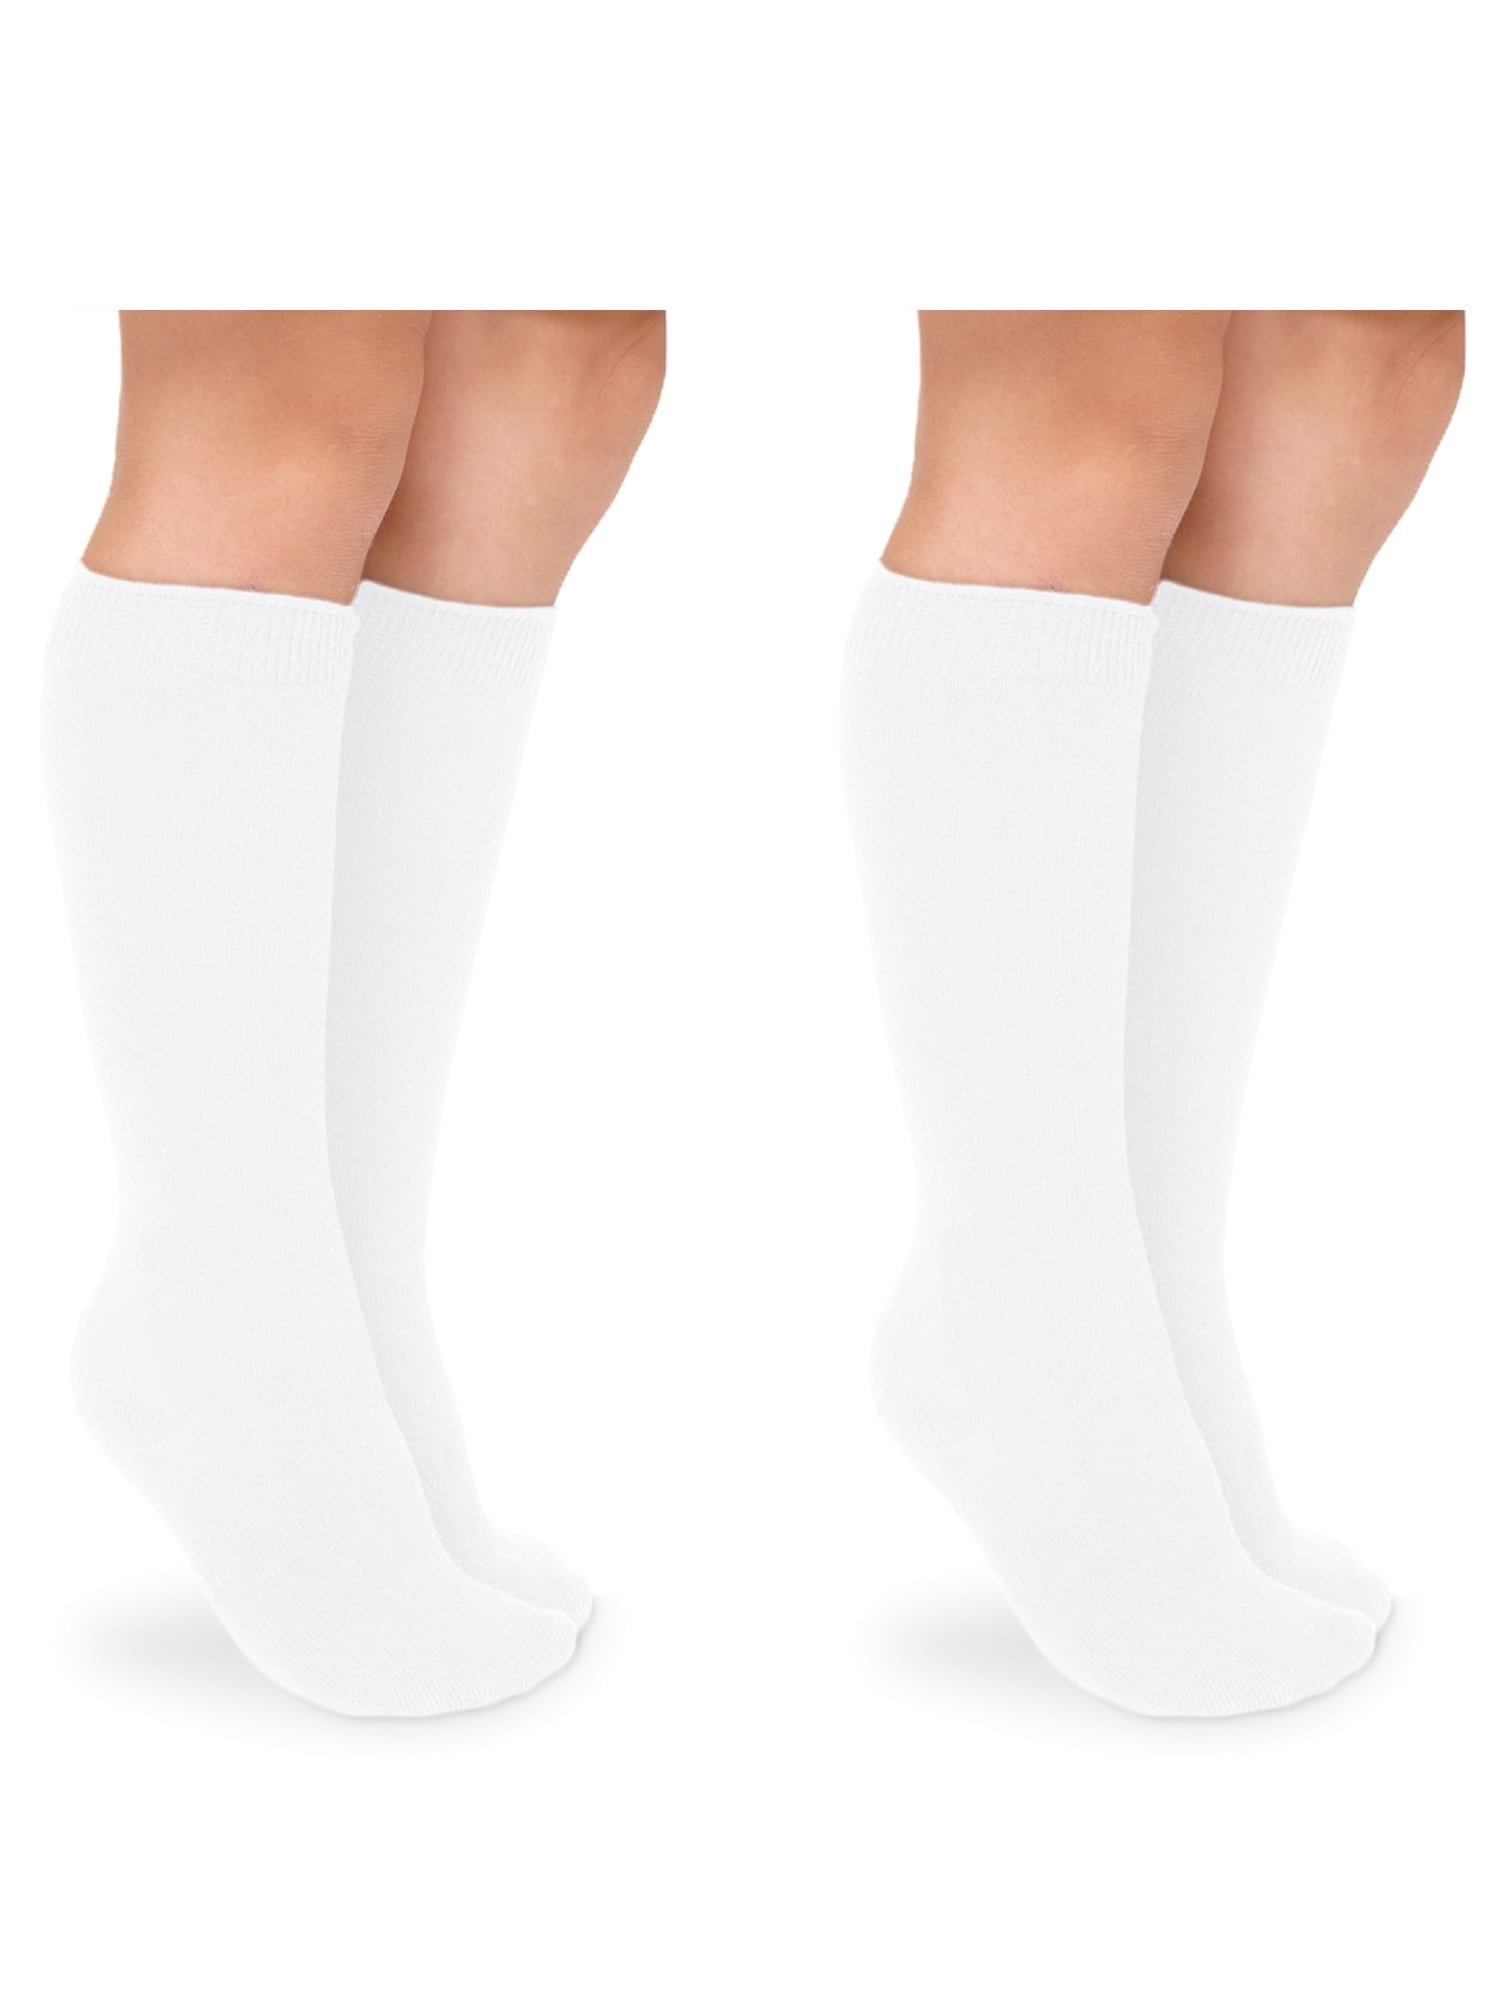 Jefferies Socks Boys School Uniform Cotton Knee High 6 Pack 